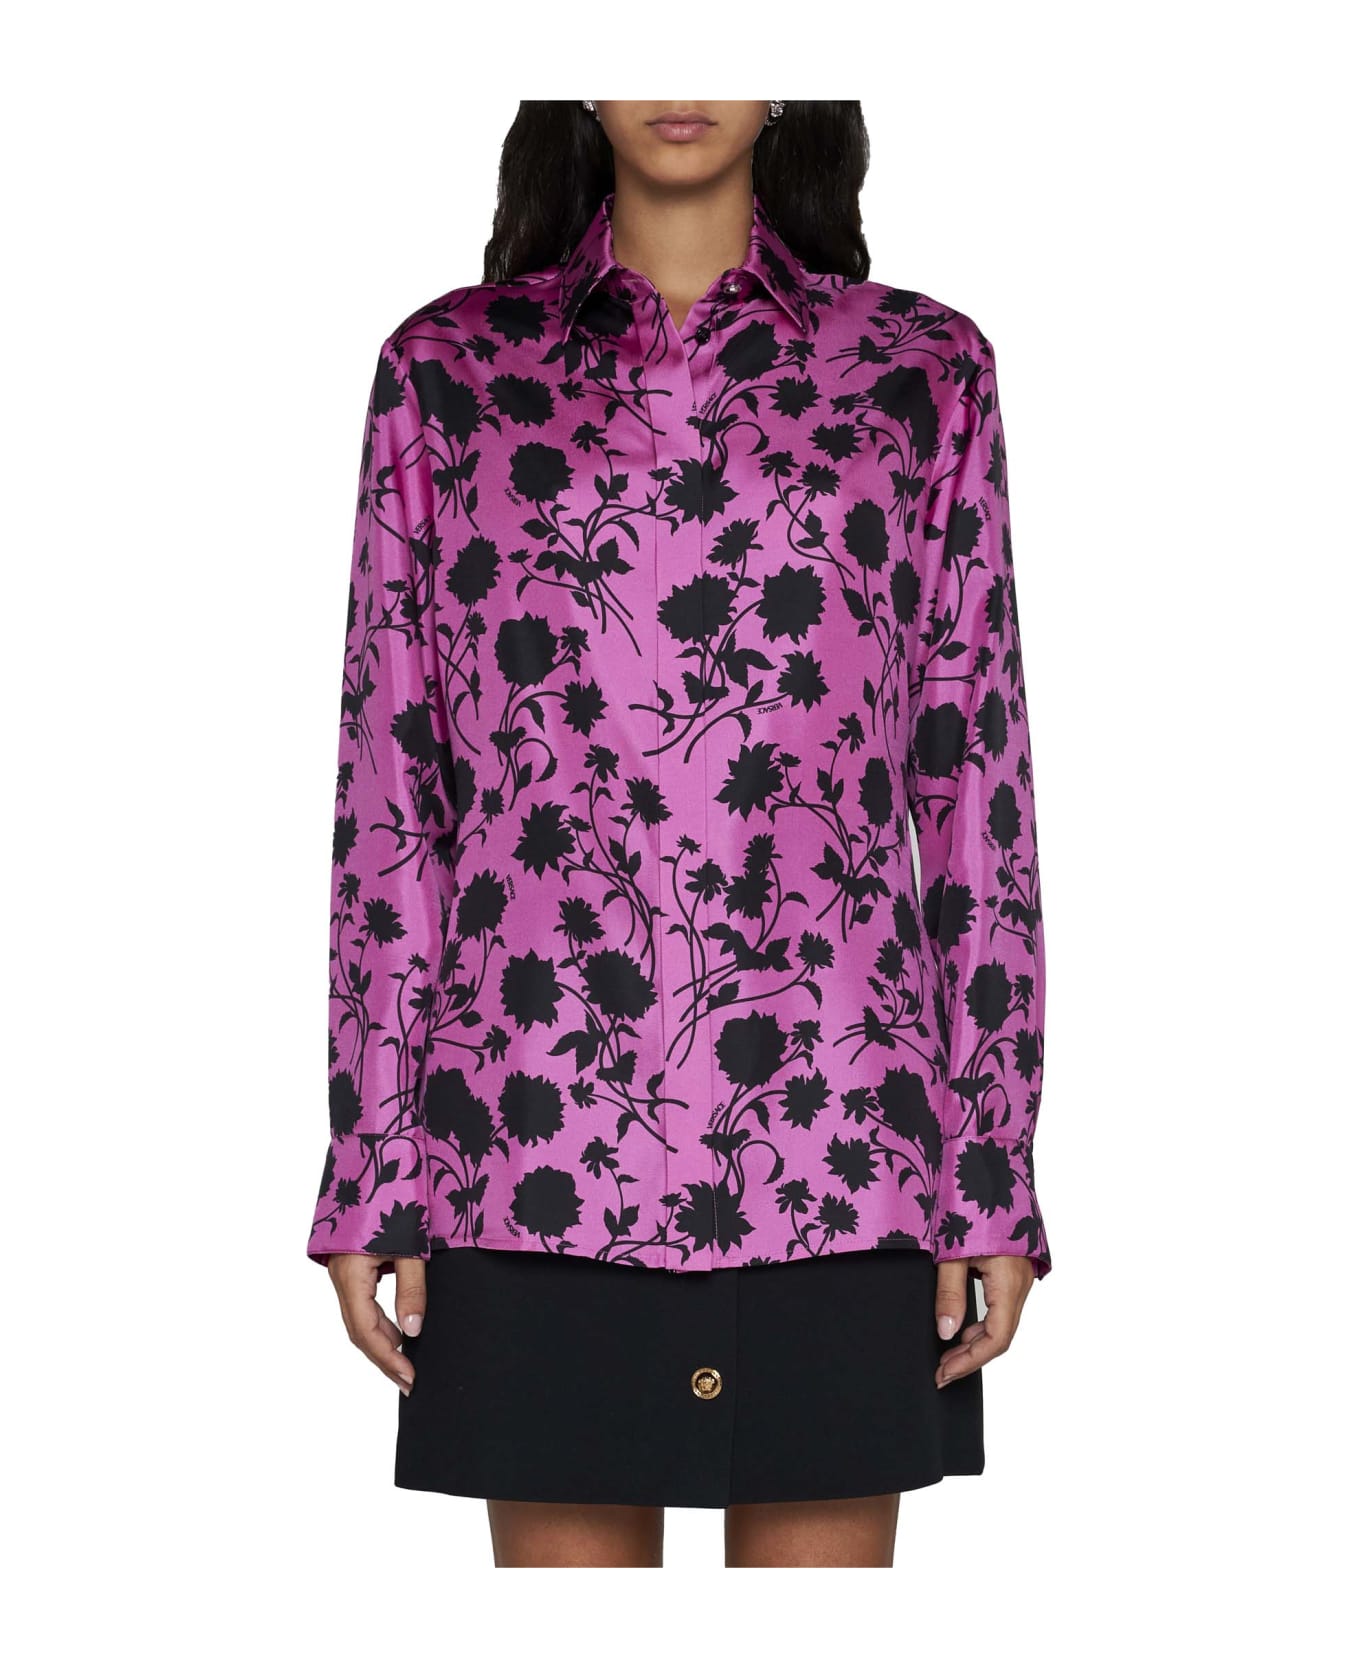 Versace Informal Shirt Floral Silhouette Print Twill Silk Fabric 50% - Waterlily Black シャツ